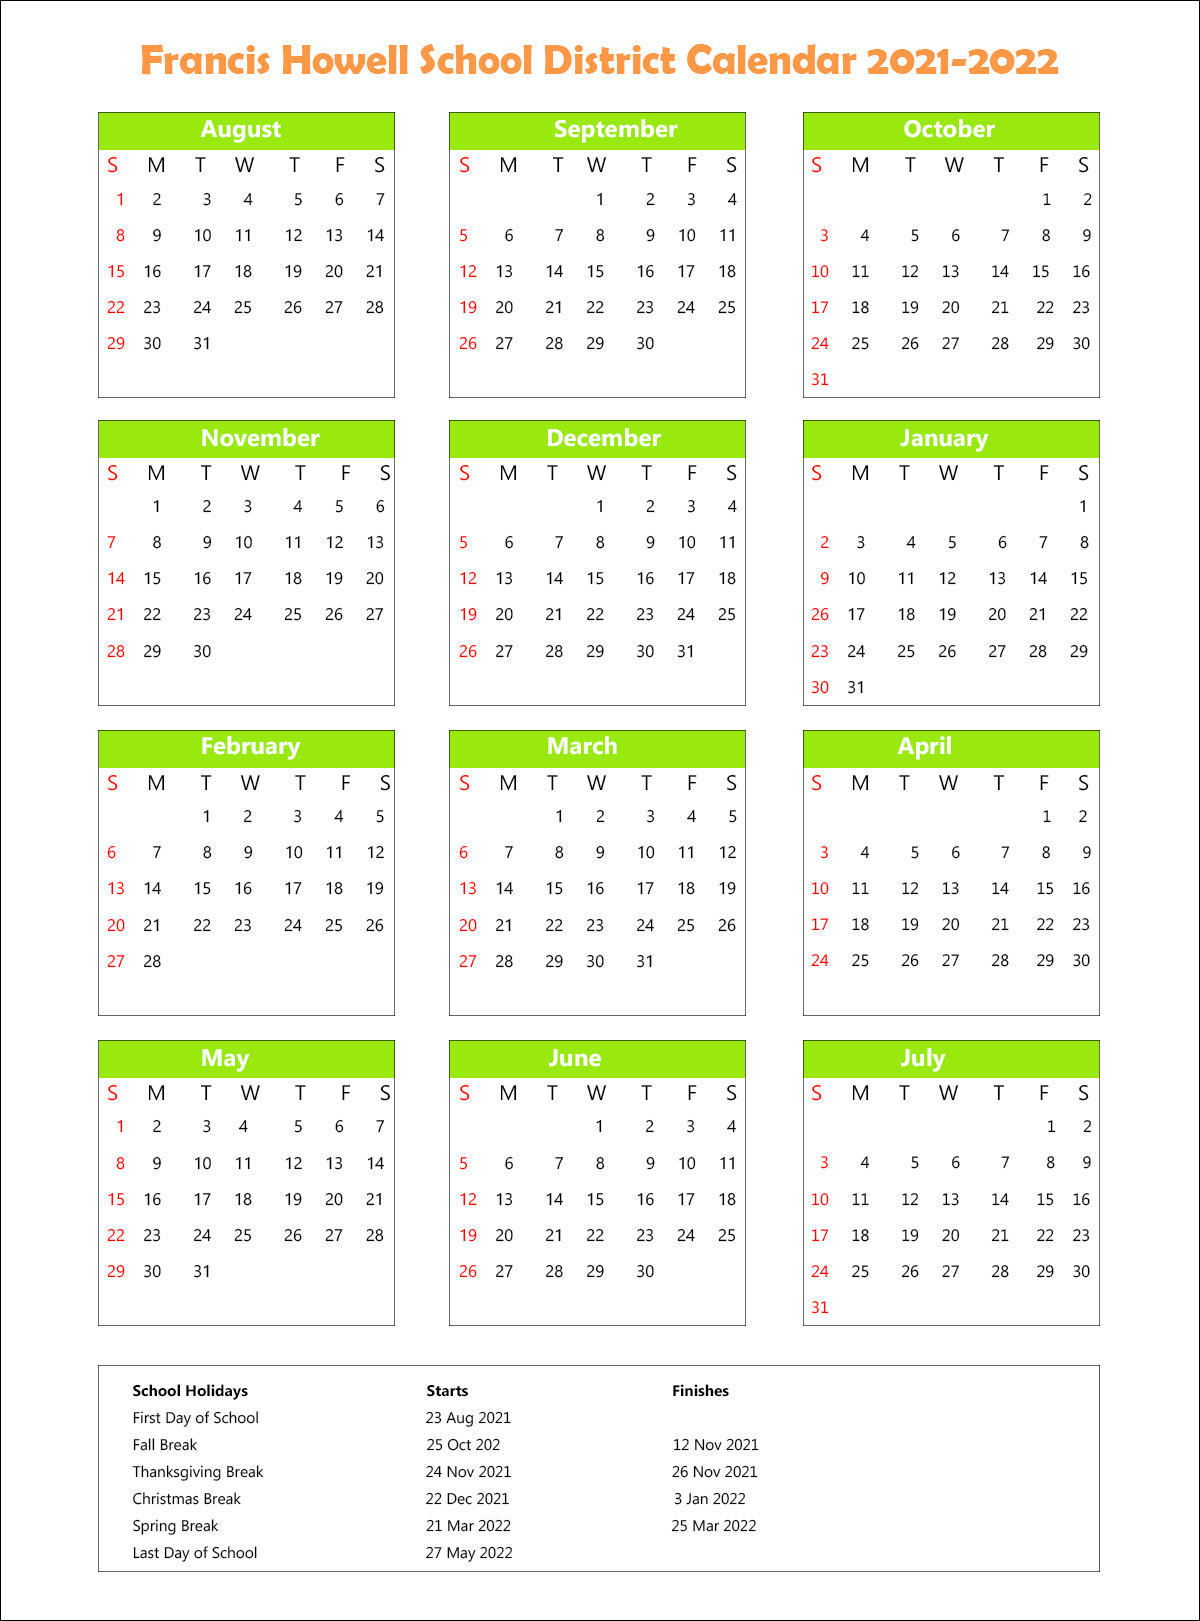 Francis Howell School District, Missouri Calendar Holidays 2021